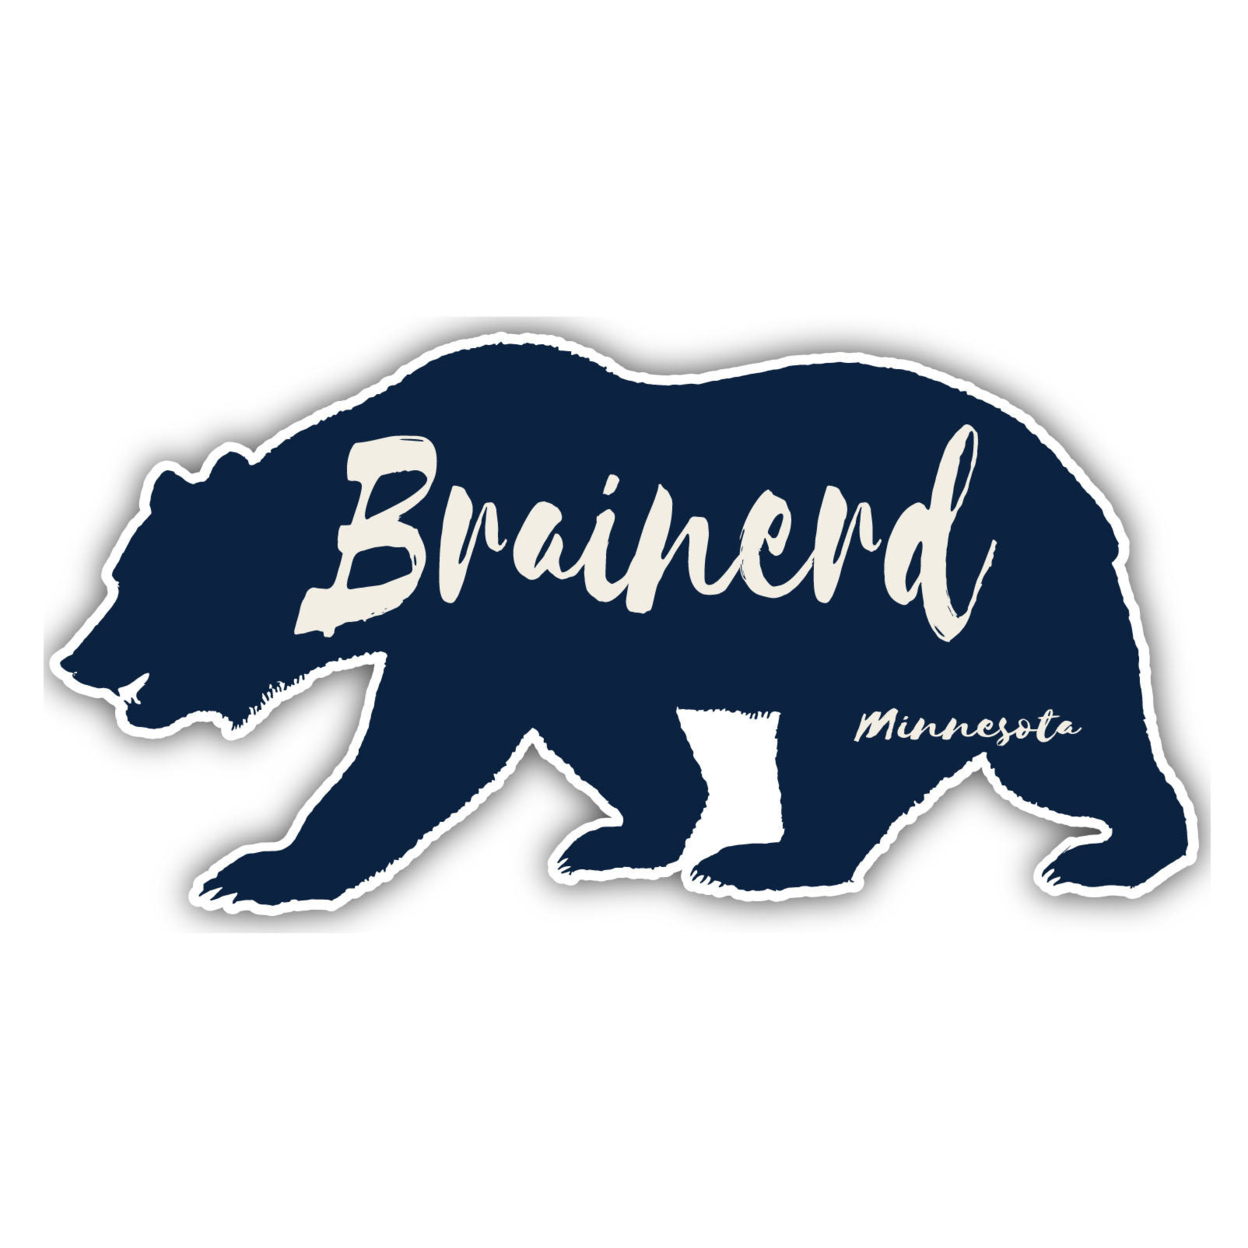 Brainerd Minnesota Souvenir Decorative Stickers (Choose Theme And Size) - 4-Pack, 10-Inch, Tent